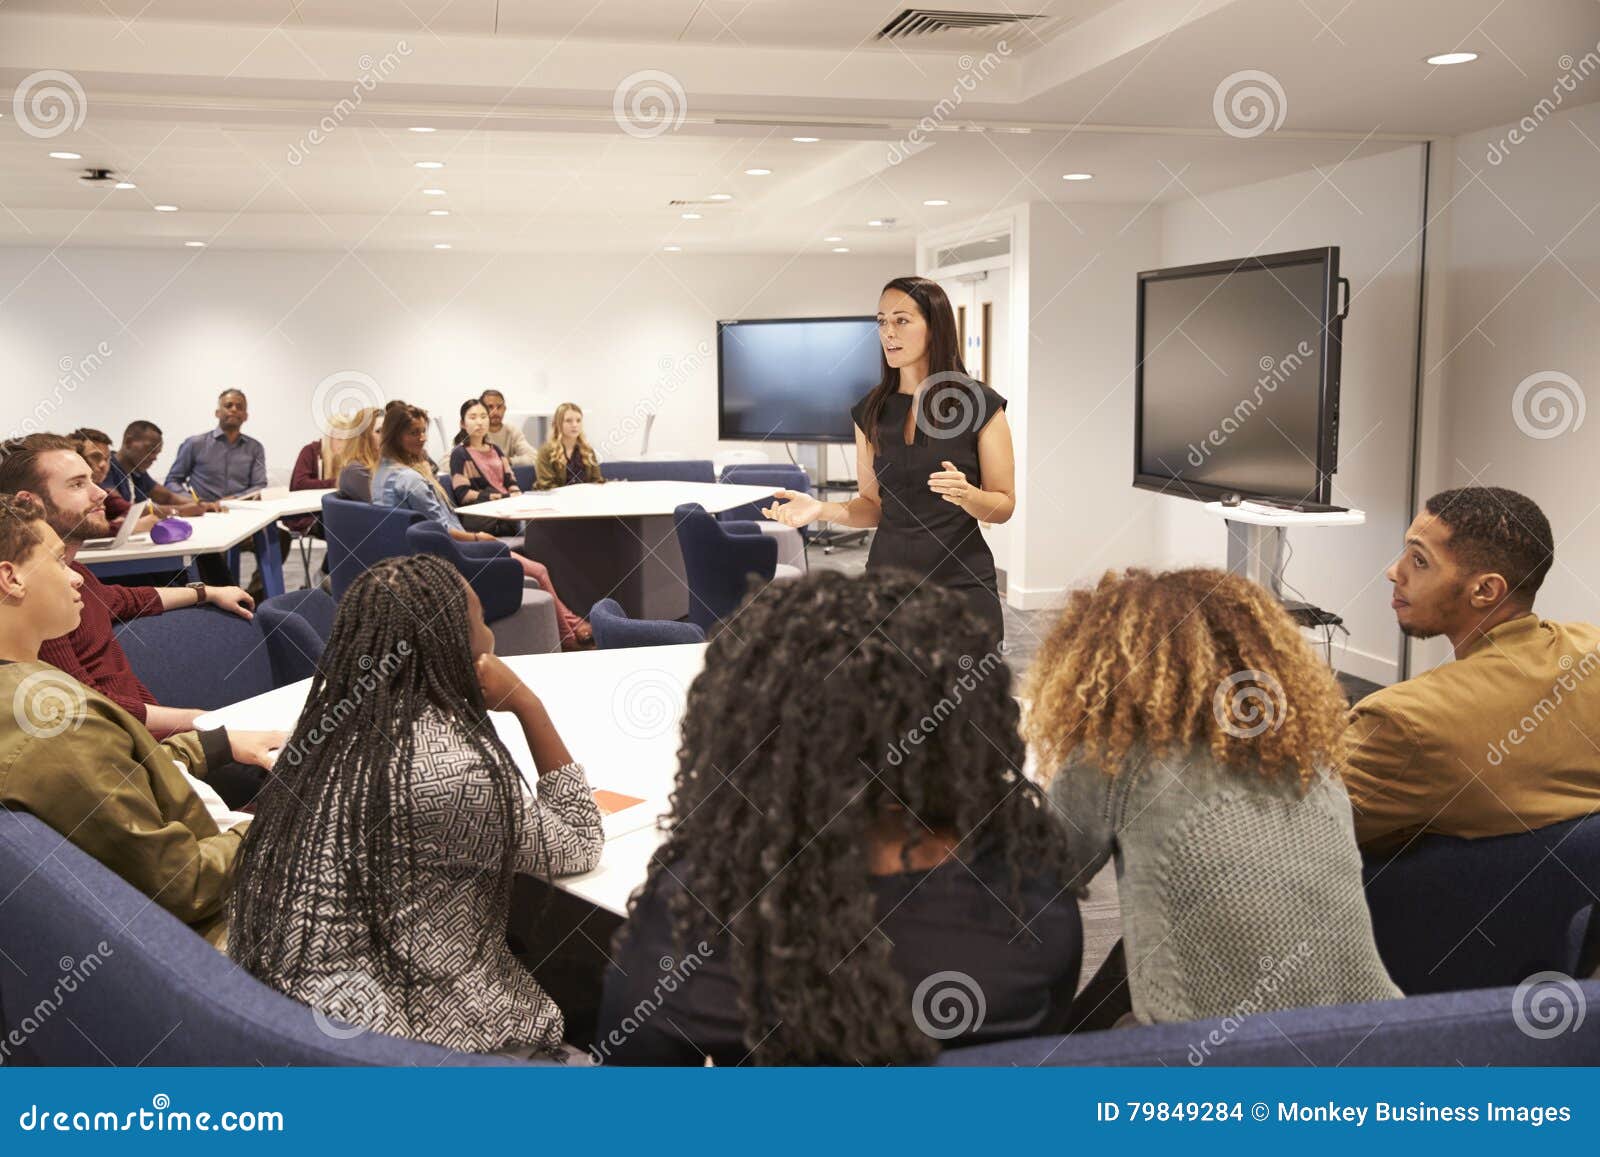 female teacher addressing university students in a classroom